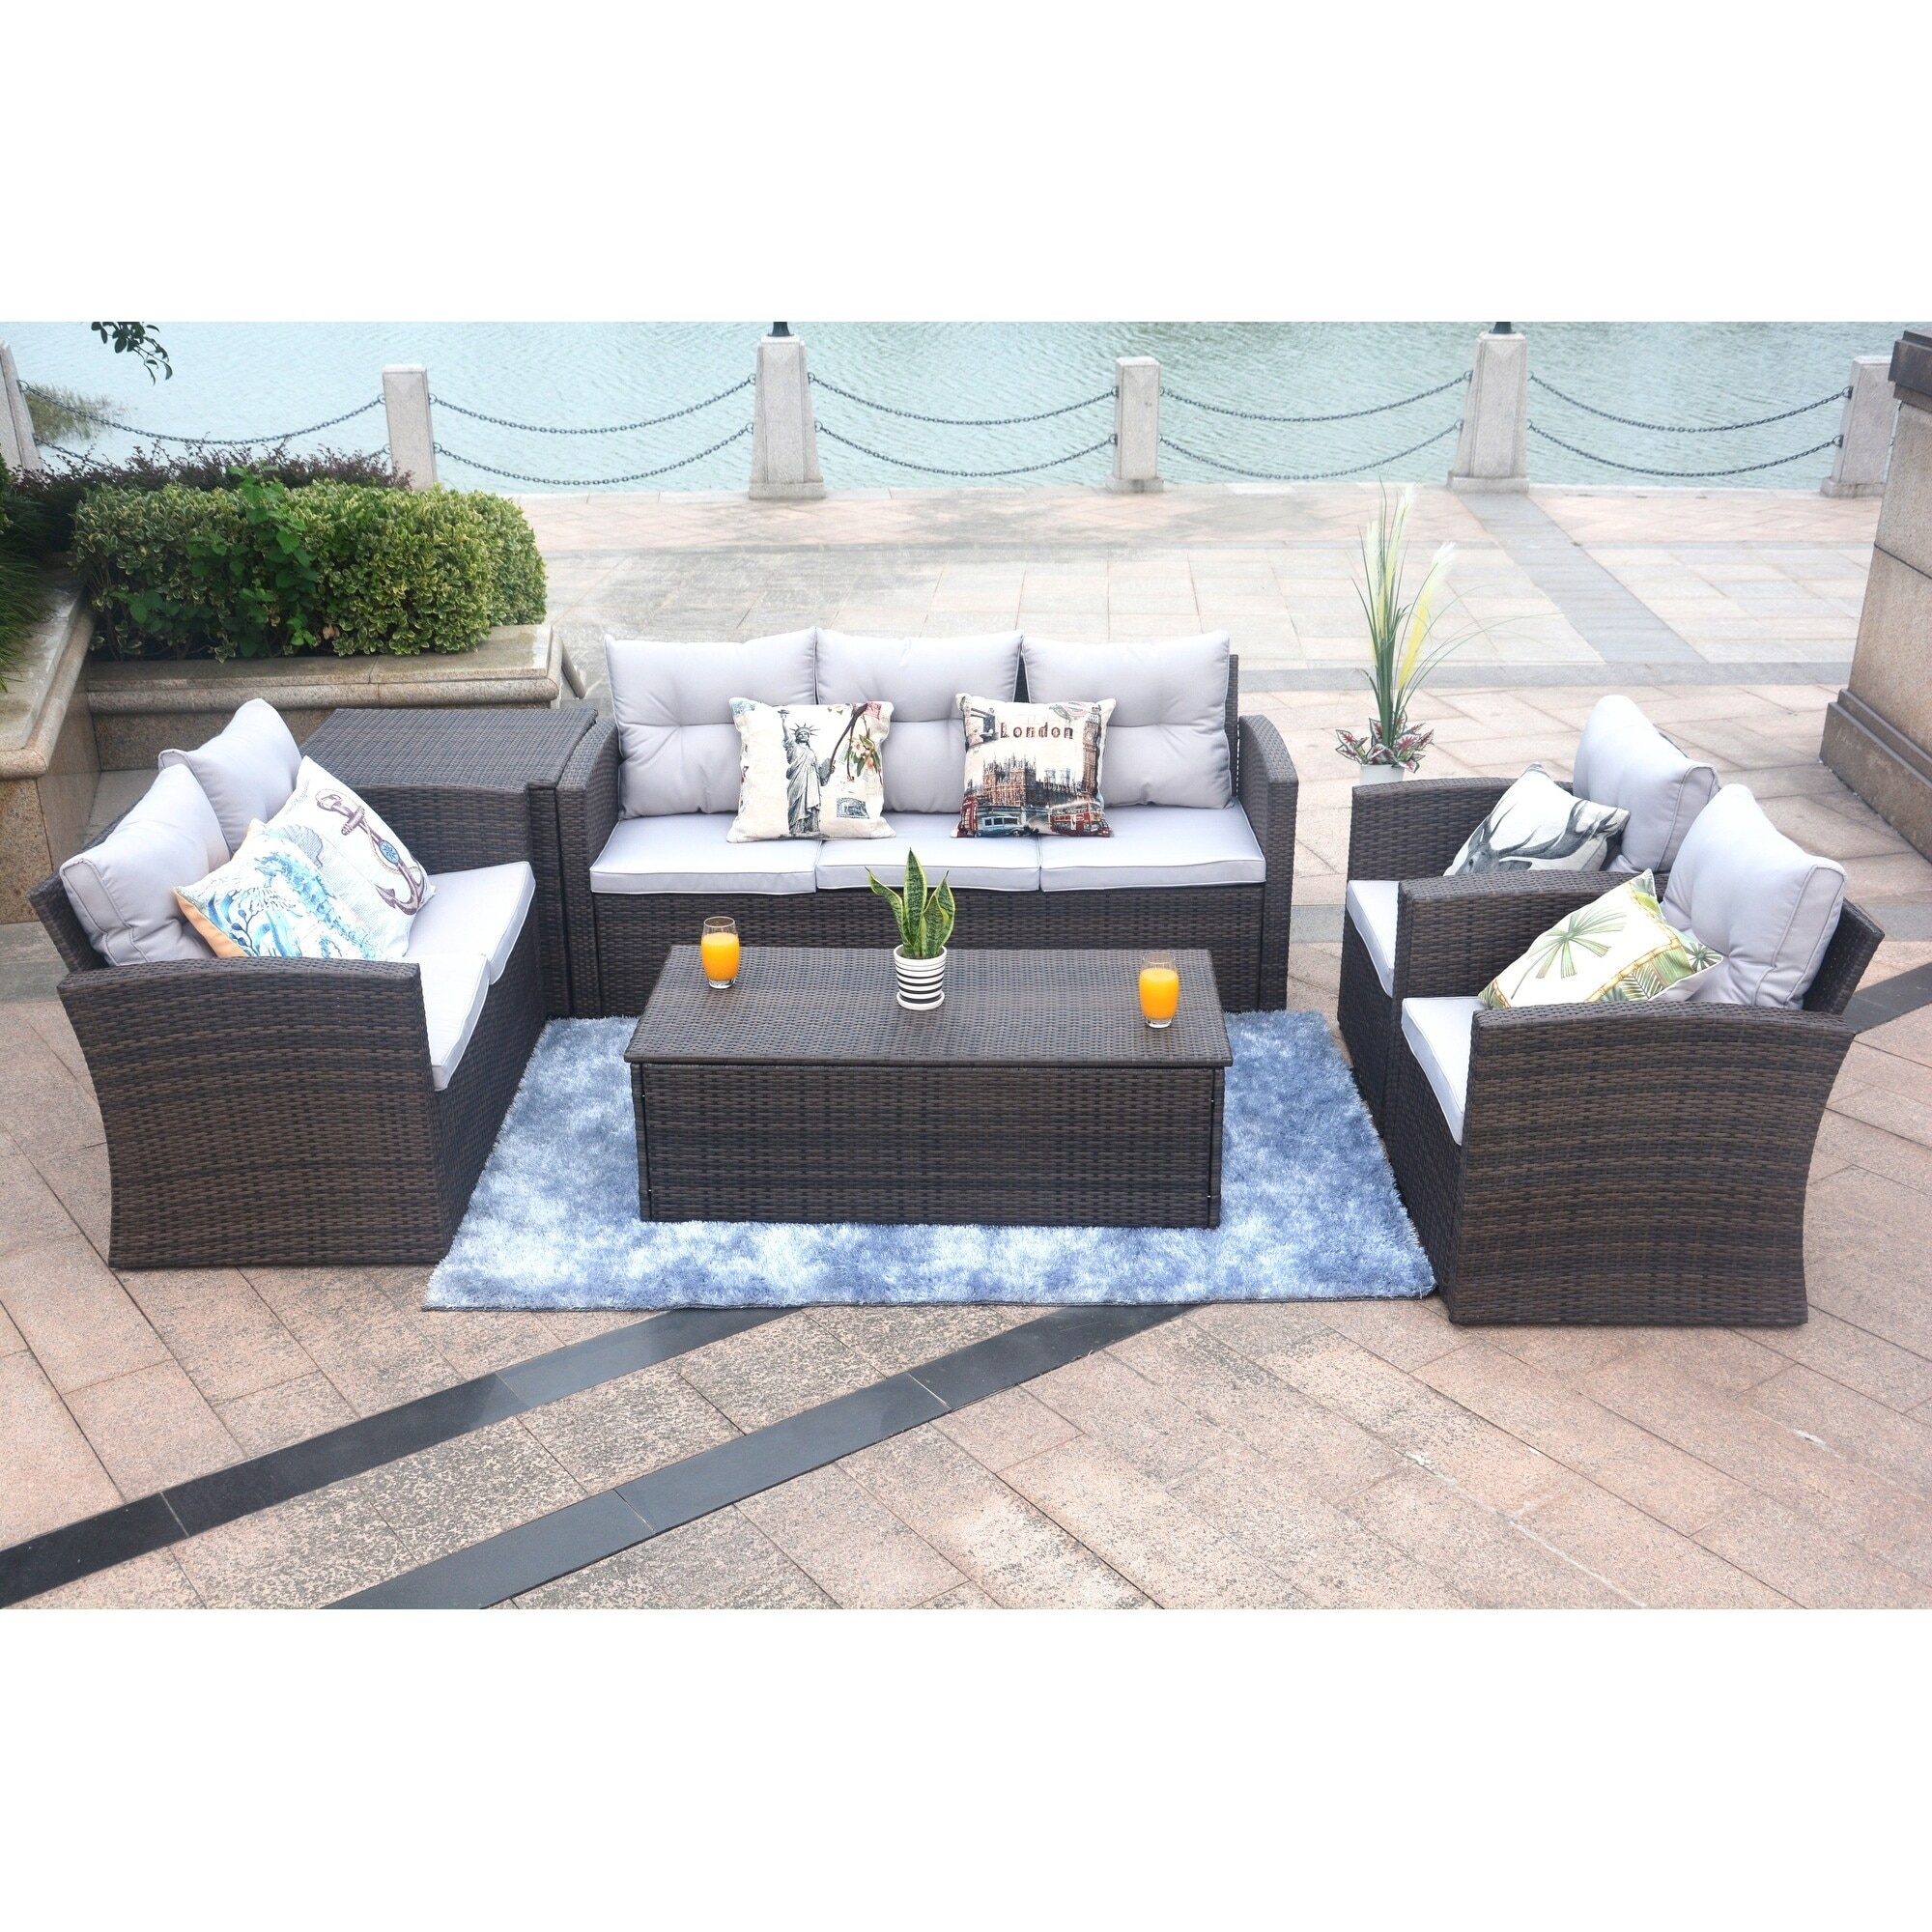 Moda 6 Pieces Wicker Sofa Set Outdoor Sectional Furniture(including A Rain Cover) - 9 X 12